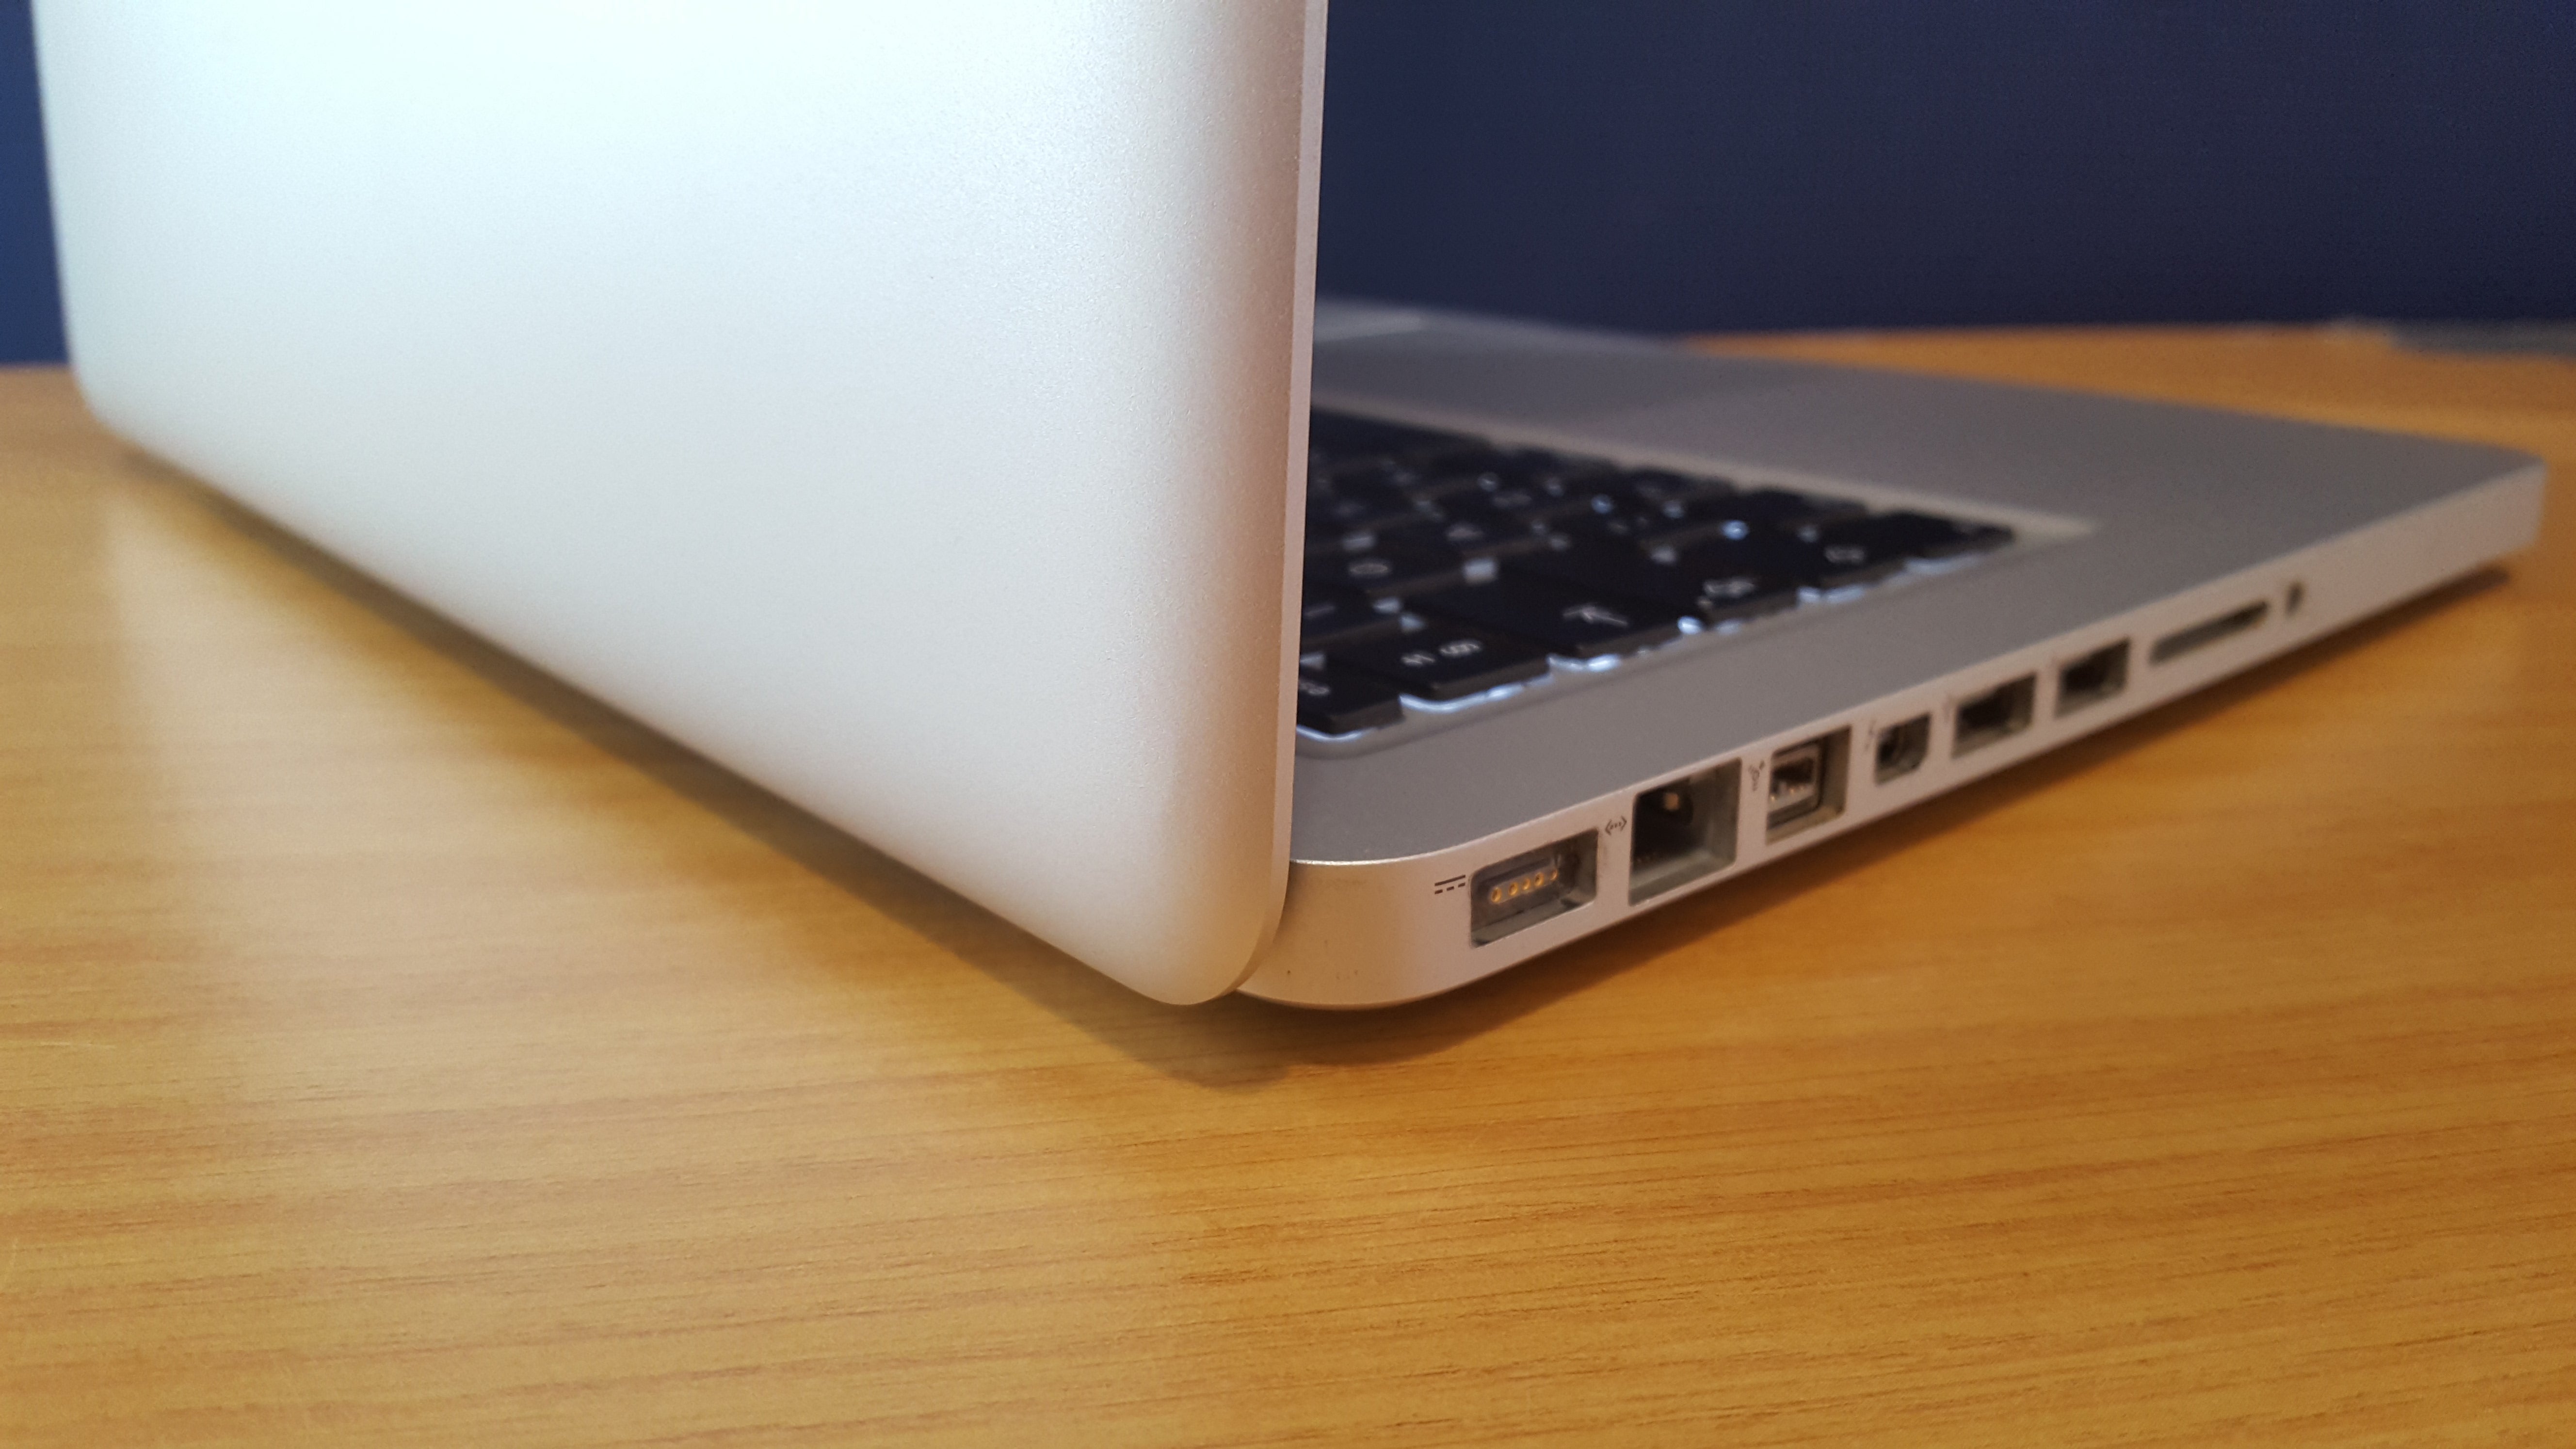 Apple Laptops - MacBook Pro "Core i7" 2.8 13" Late 2011, 4GB RAM, 500GB